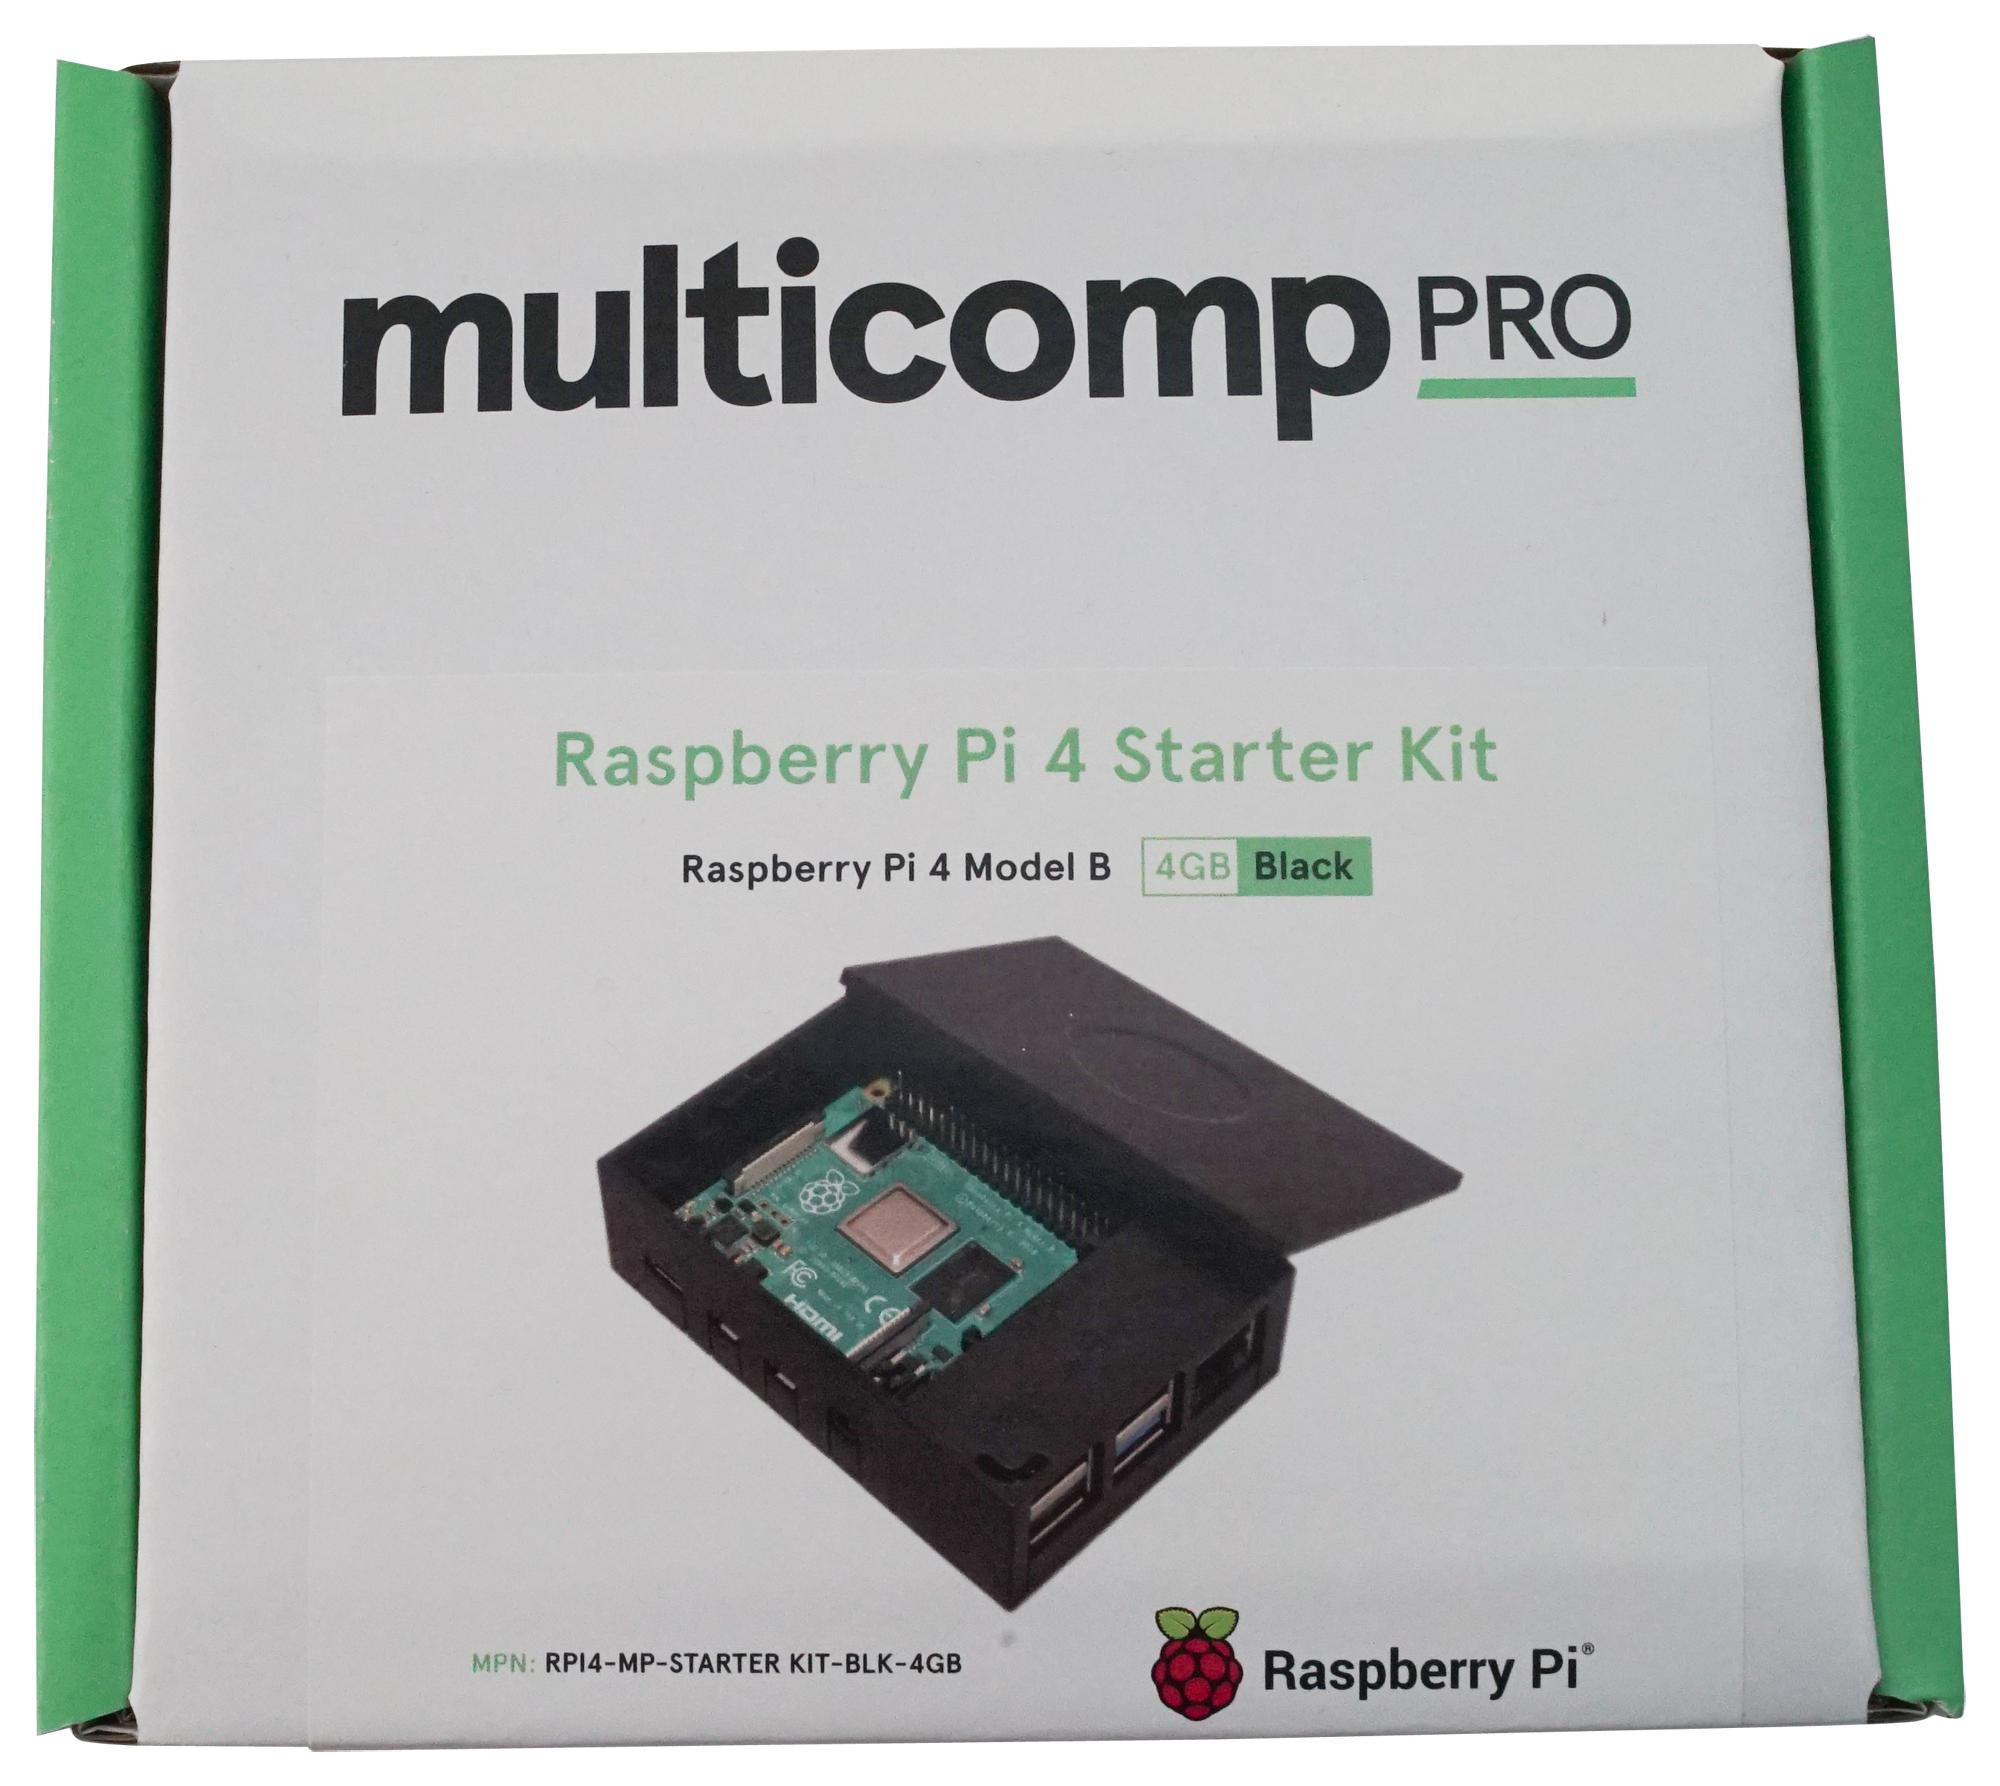 RPI4-MP-STARTER KIT-BLK-4GB RASPBERRY PI 4B STARTER KIT, 4GB, BLK MULTICOMP PRO